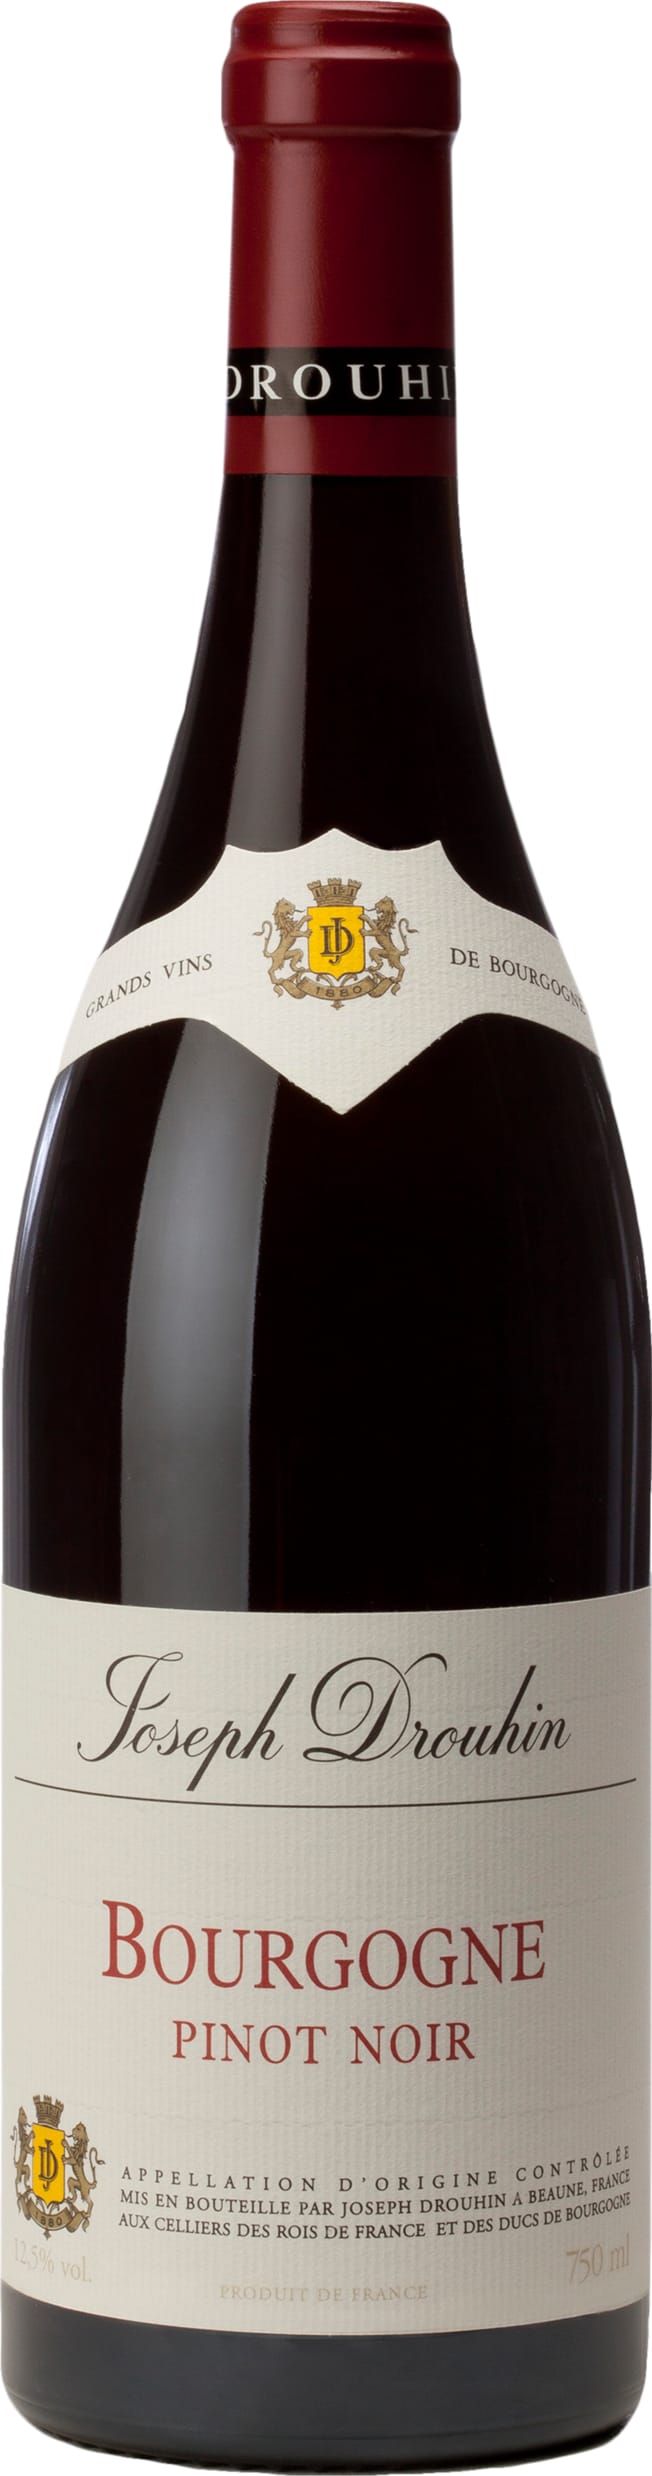 Joseph Drouhin Bourgogne Pinot Noir 2021 75cl - Buy Joseph Drouhin Wines from GREAT WINES DIRECT wine shop